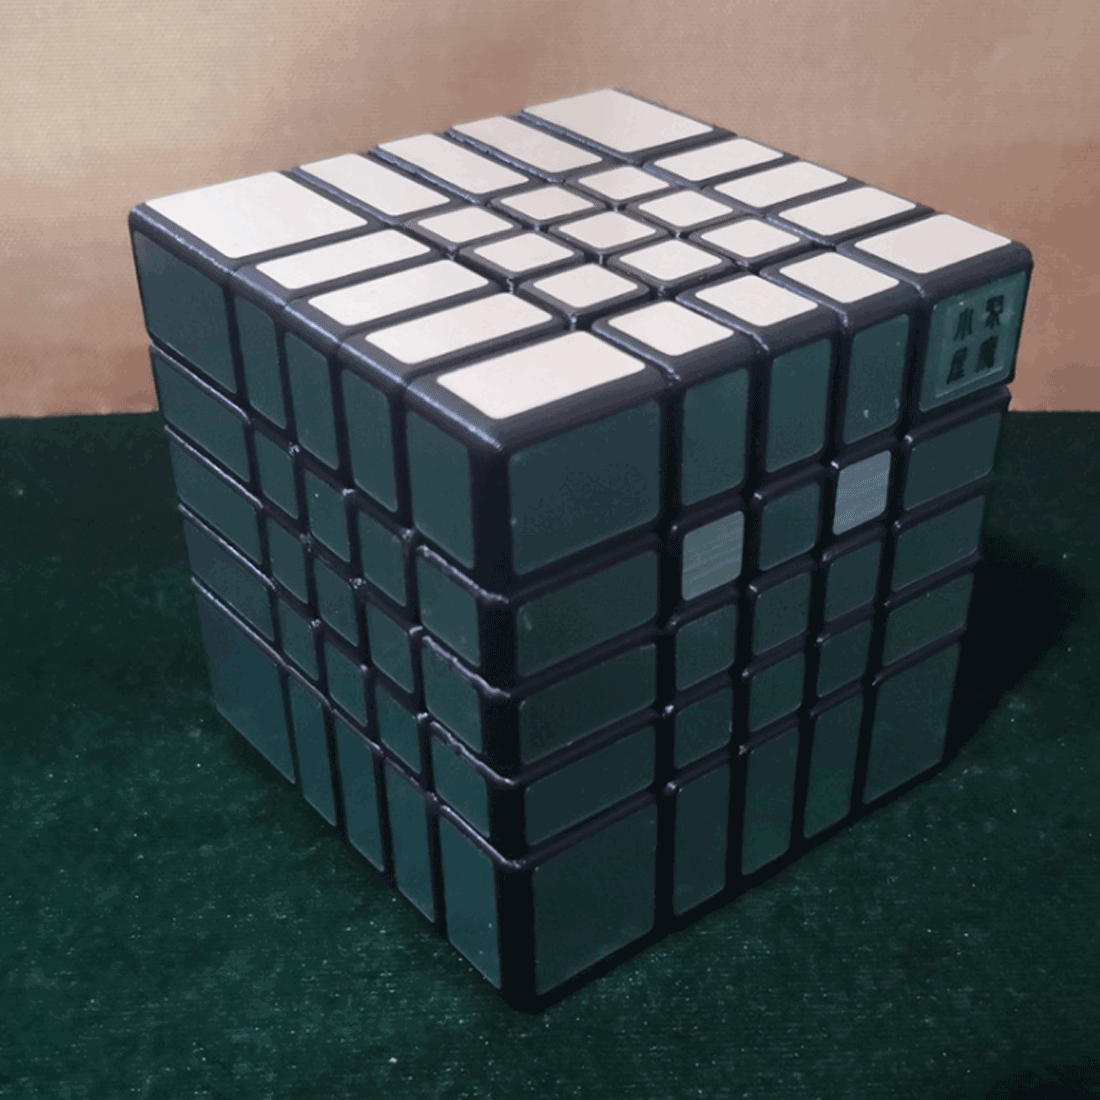 3D Printed 5x5 Mirror Speed Cube